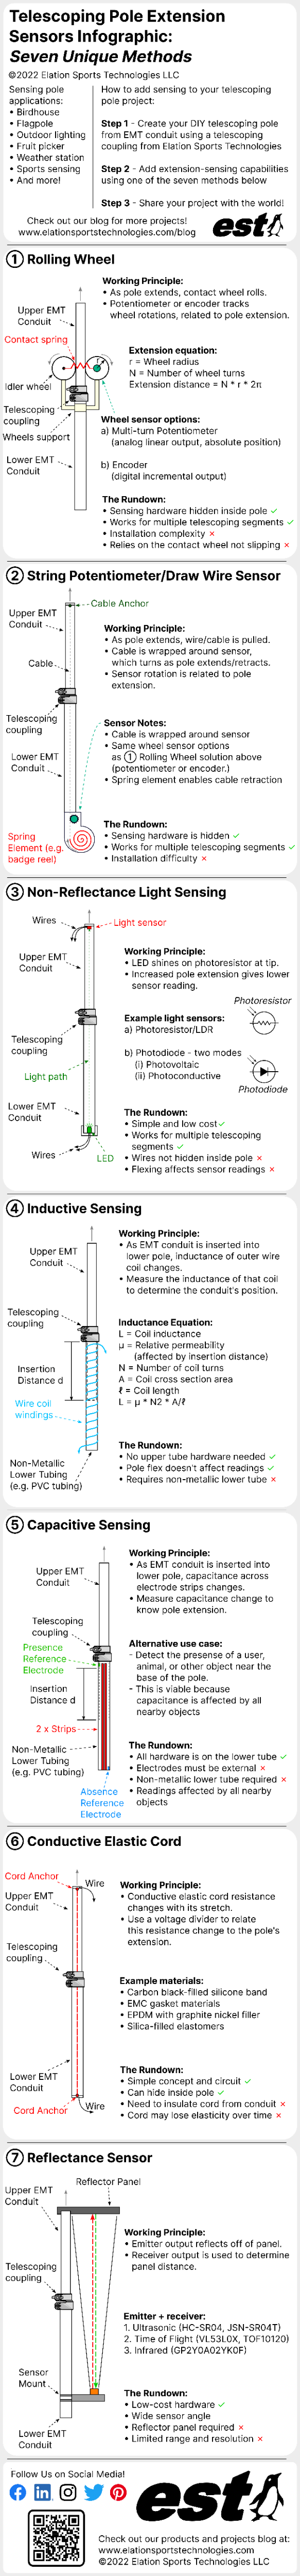 Extension Sensing - All Diagrams Combined V2 - Draft 28 Jan 2022.png